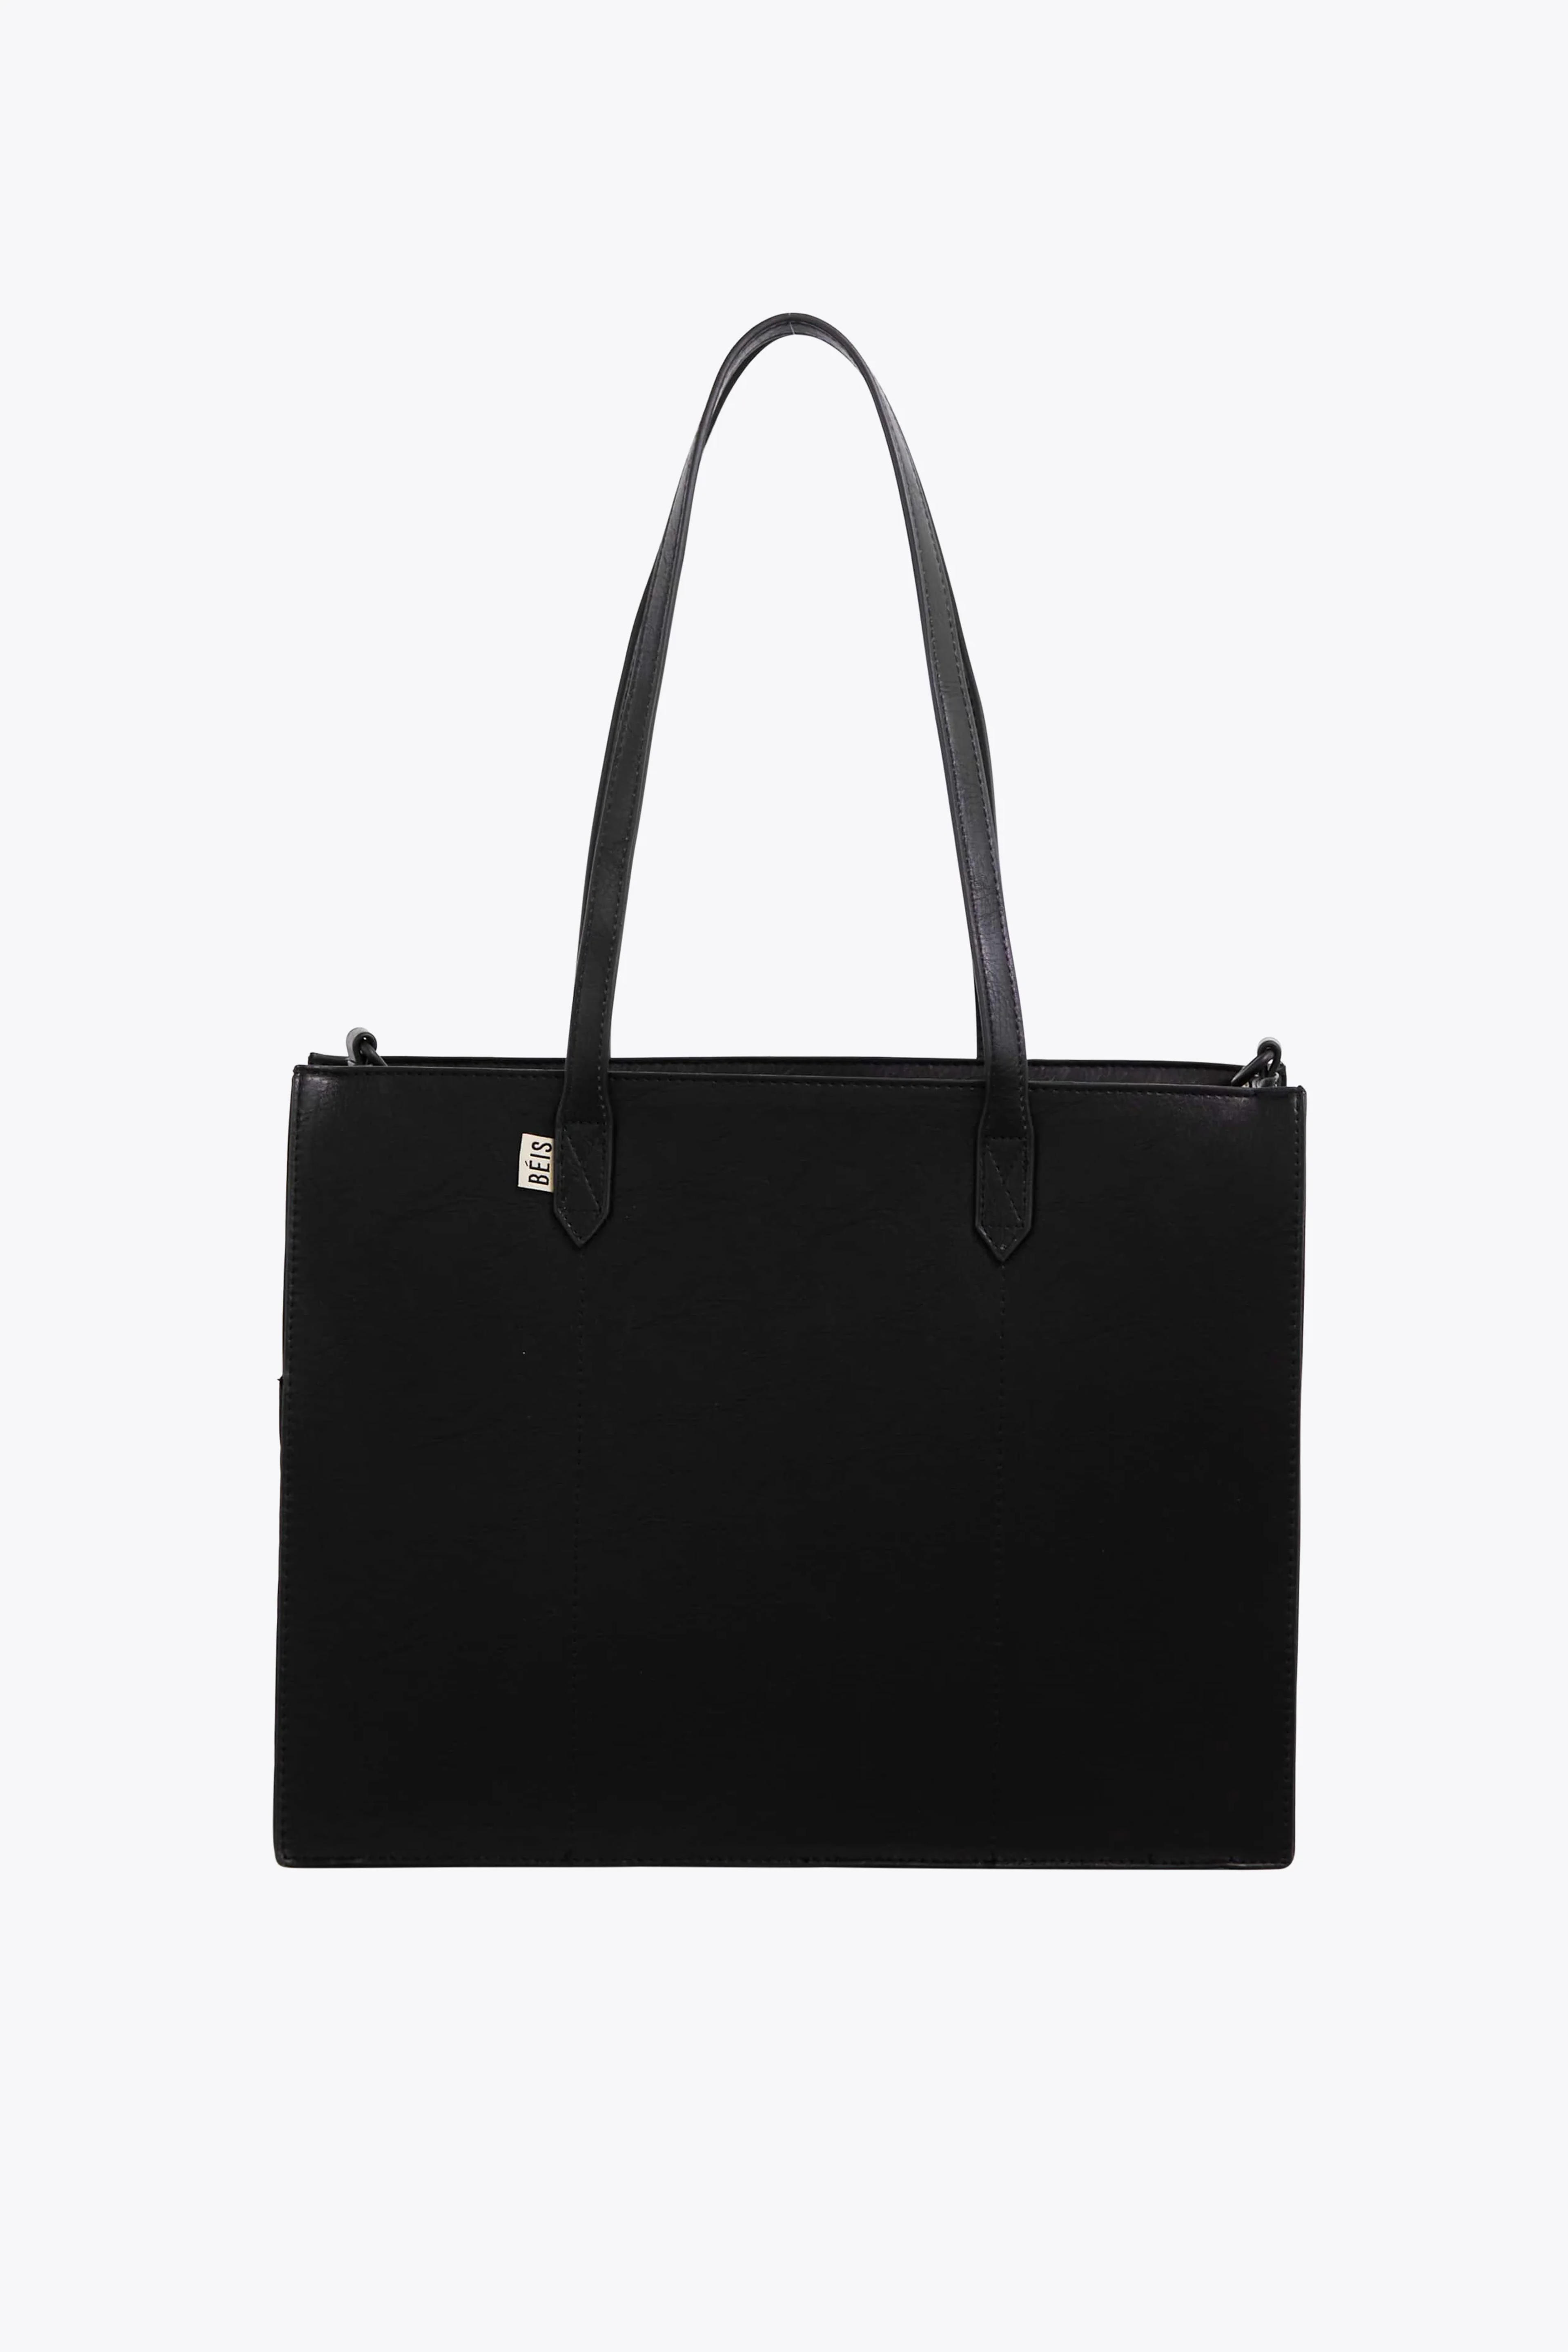 Béis 'The Work Tote' in Black - Work Bag For Women & Laptop Bag